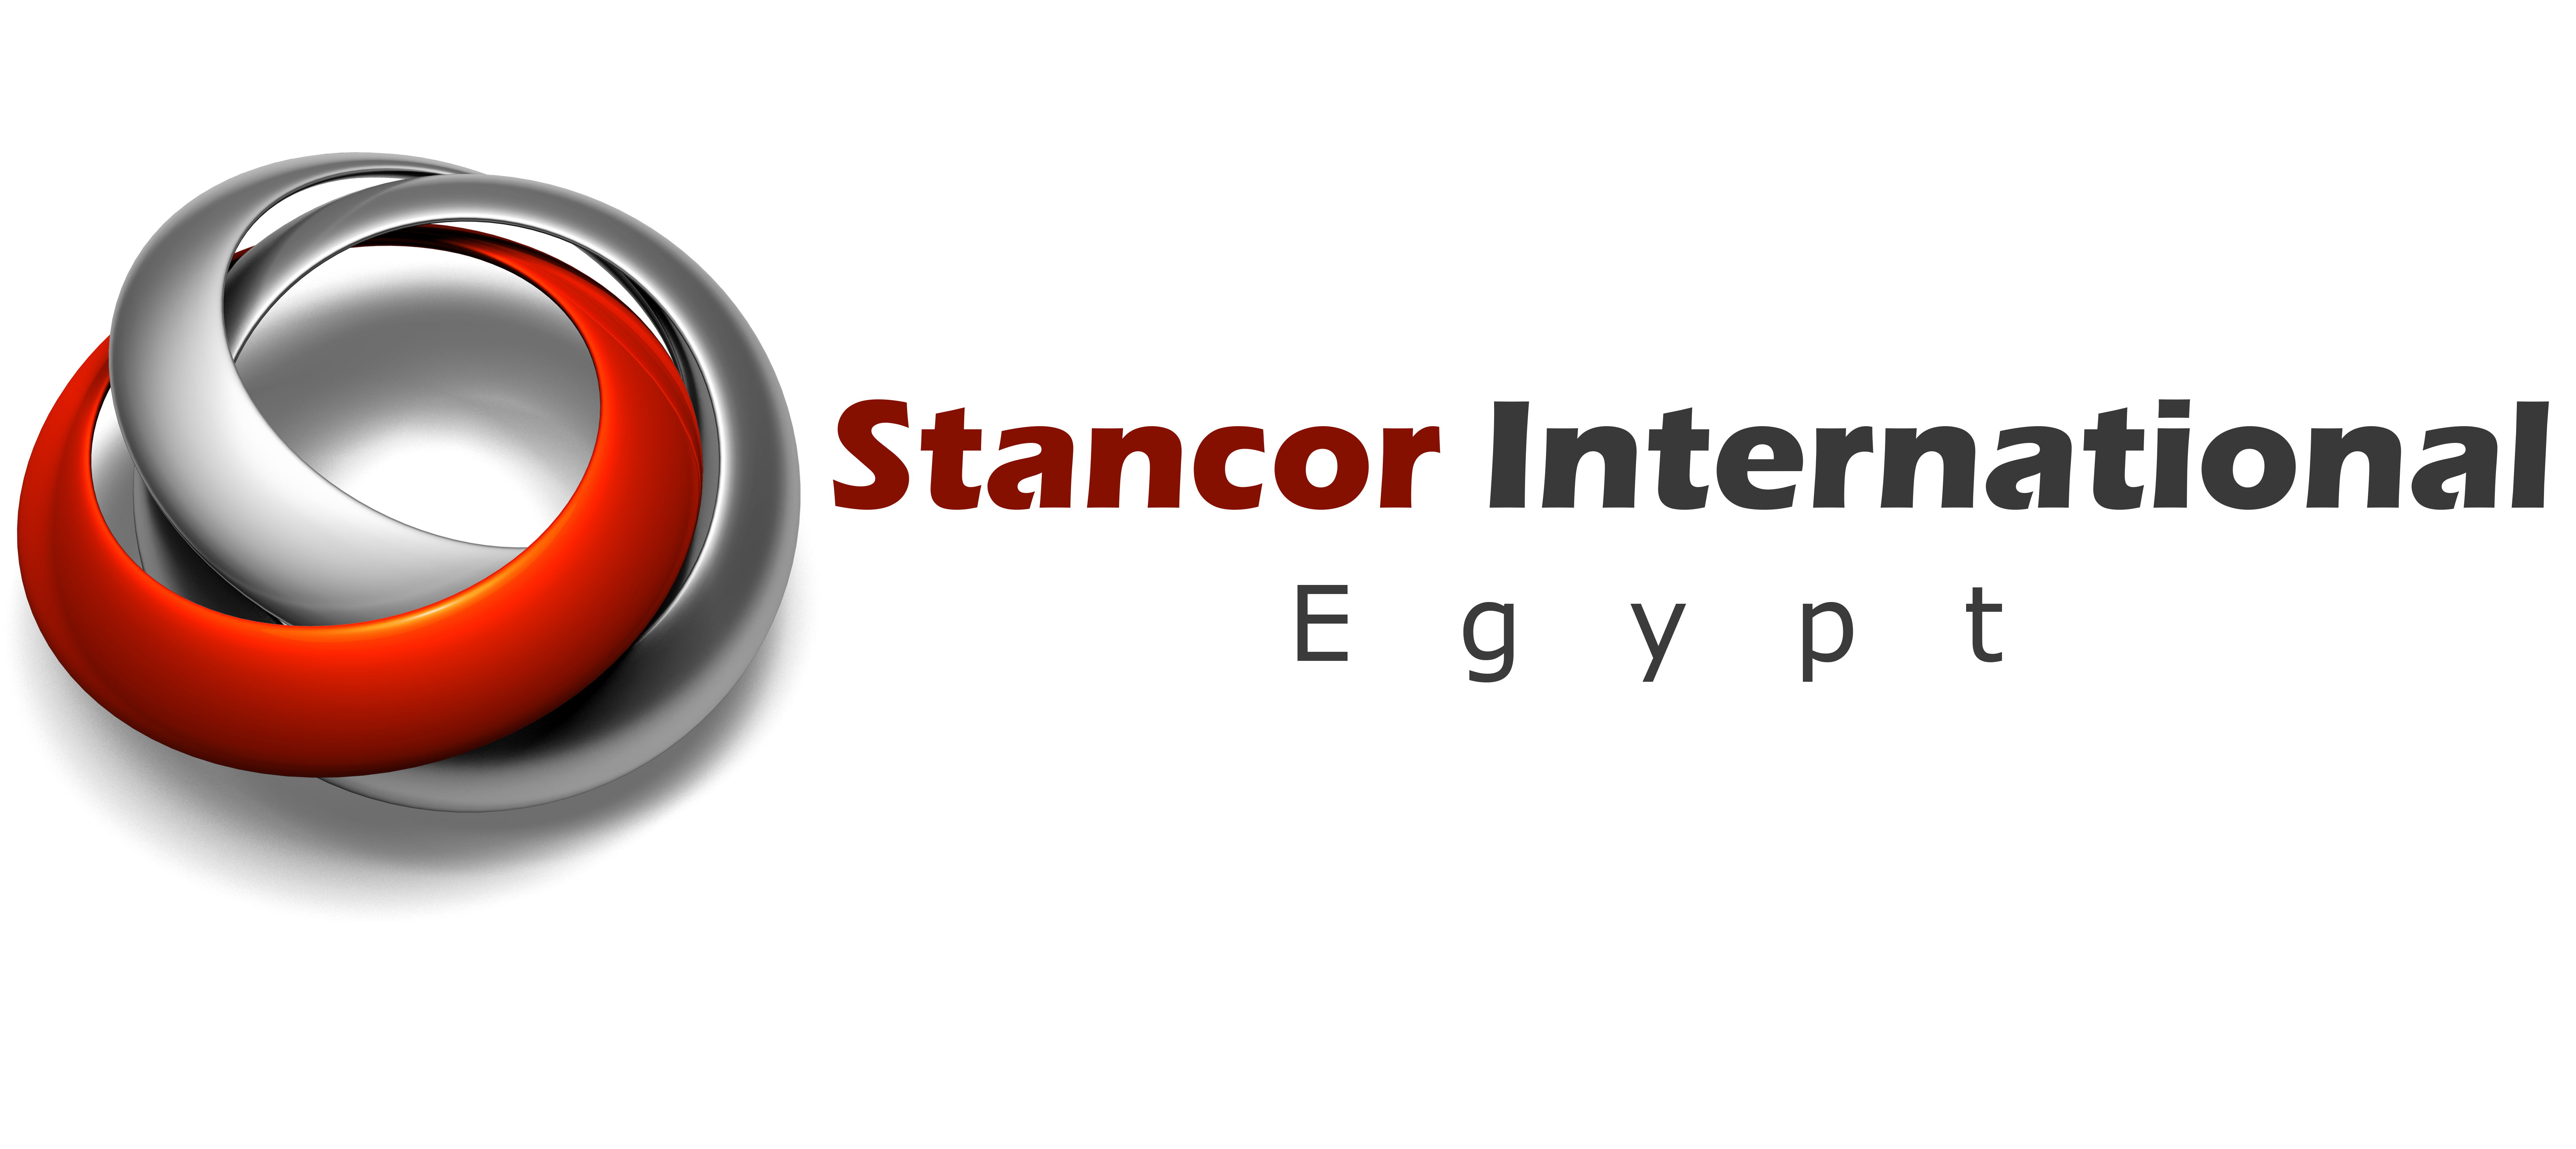 Stancor Corporate Homepage